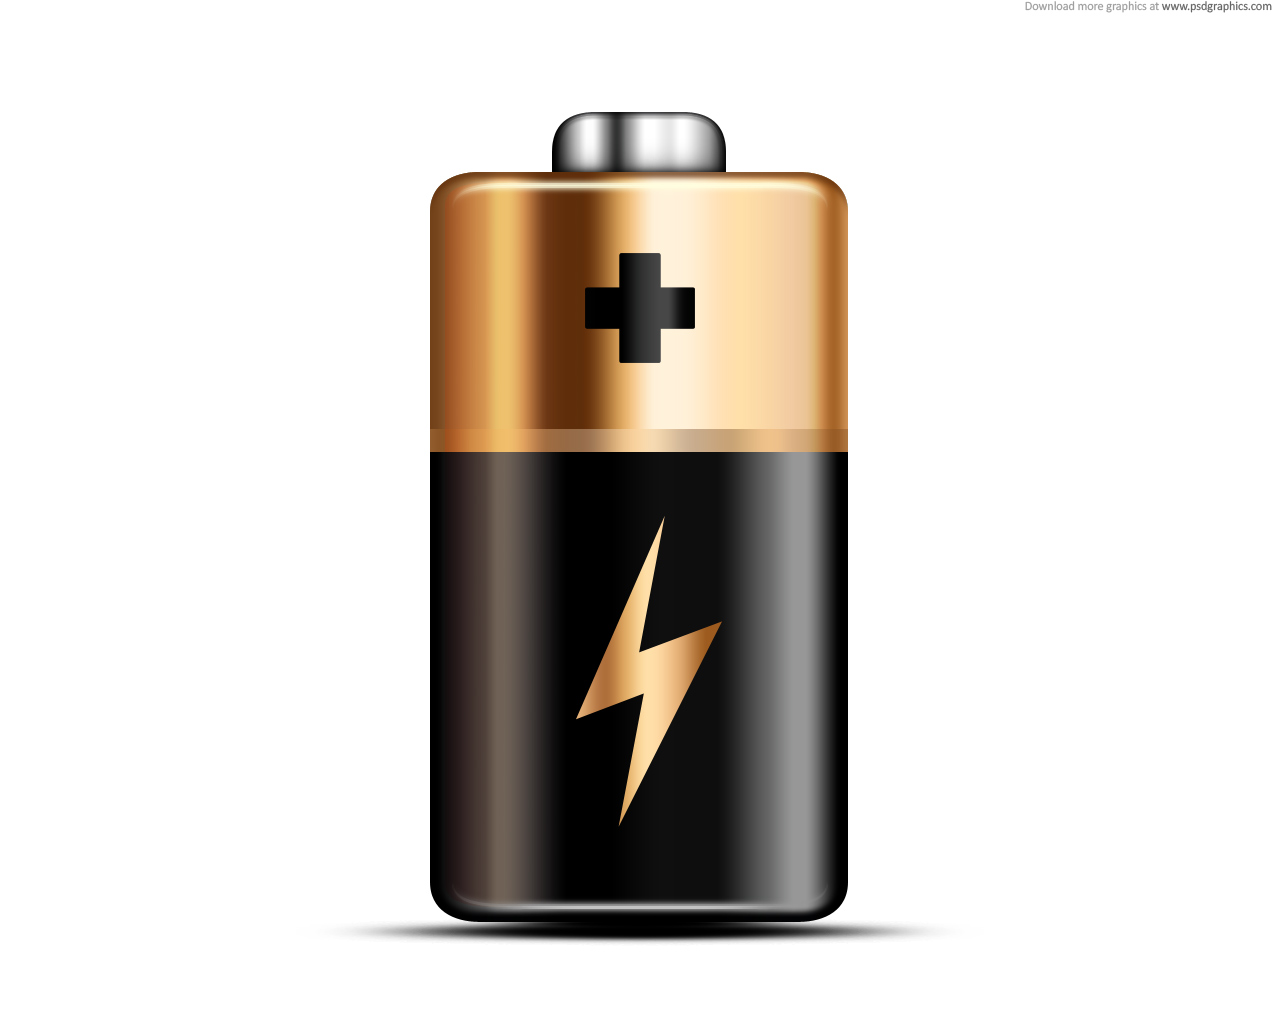 http://energysolutionsmalvern.co.uk/wp-content/uploads/2015/11/battery-energy-icon.jpg